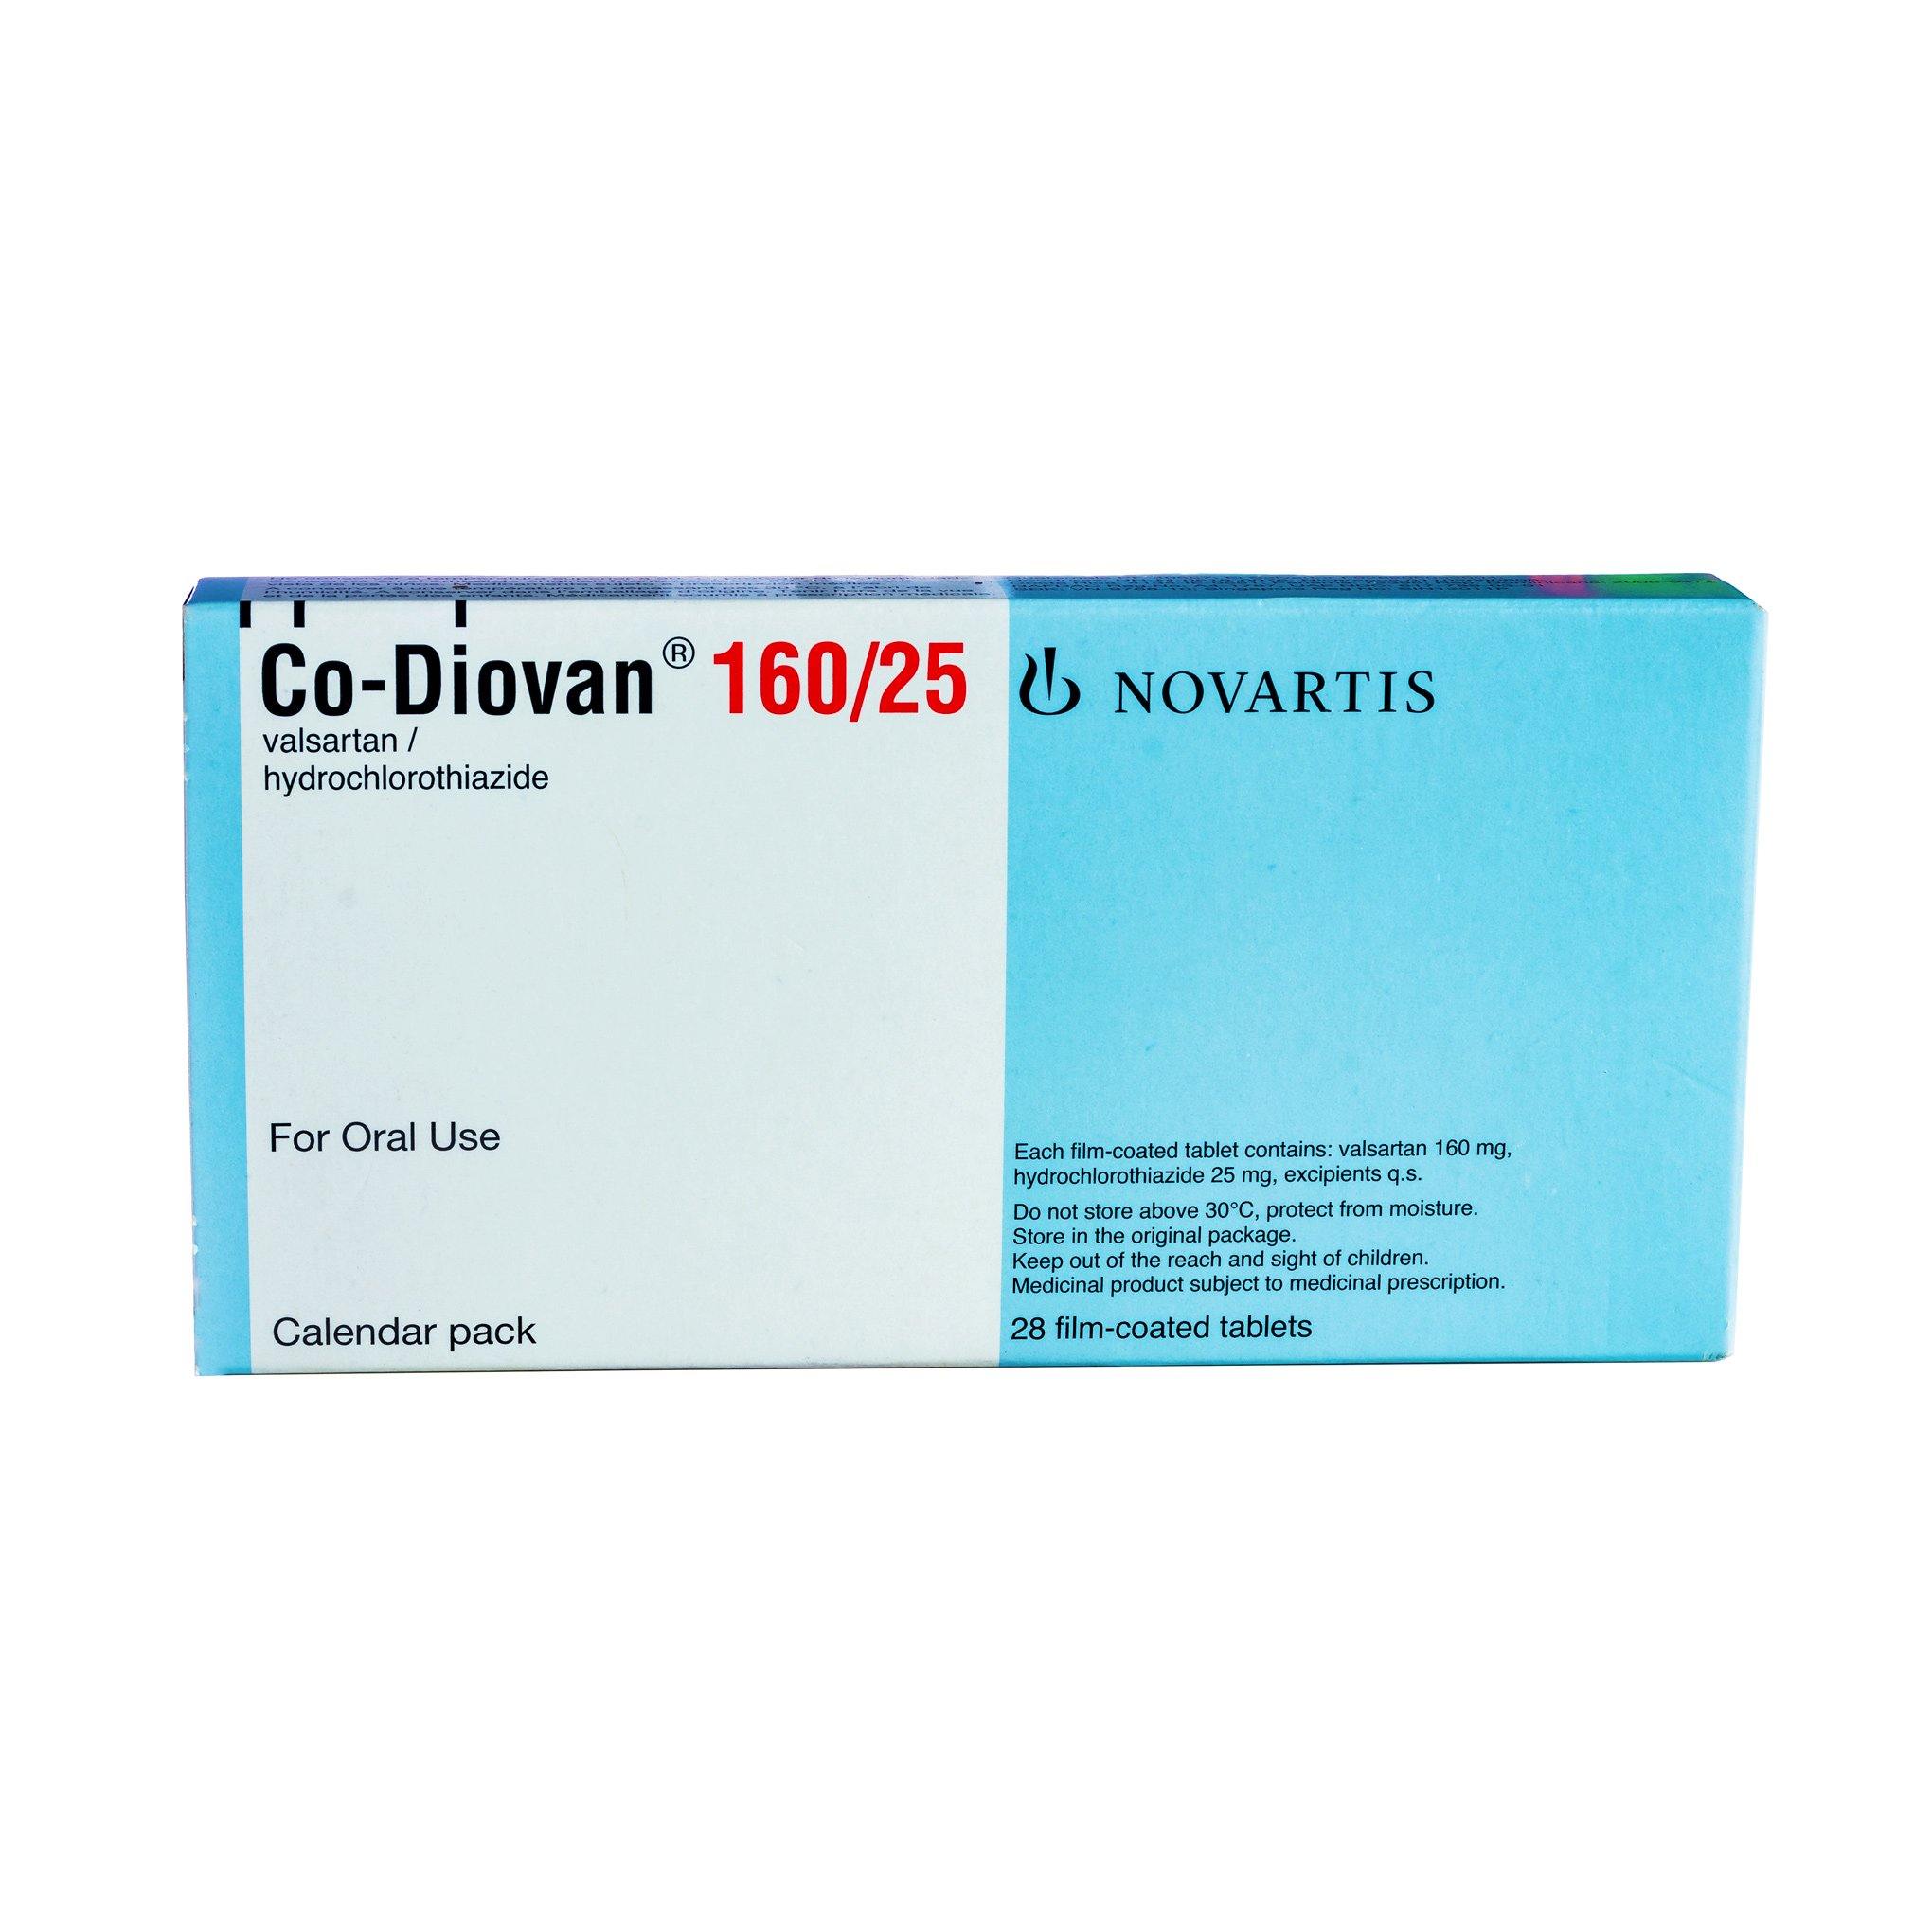 shop Co-Diovan (Valsartan/Hydrochlorothiazide) 160m/25mg Tablets X28 from HealthPlus online pharmacy in Nigeria